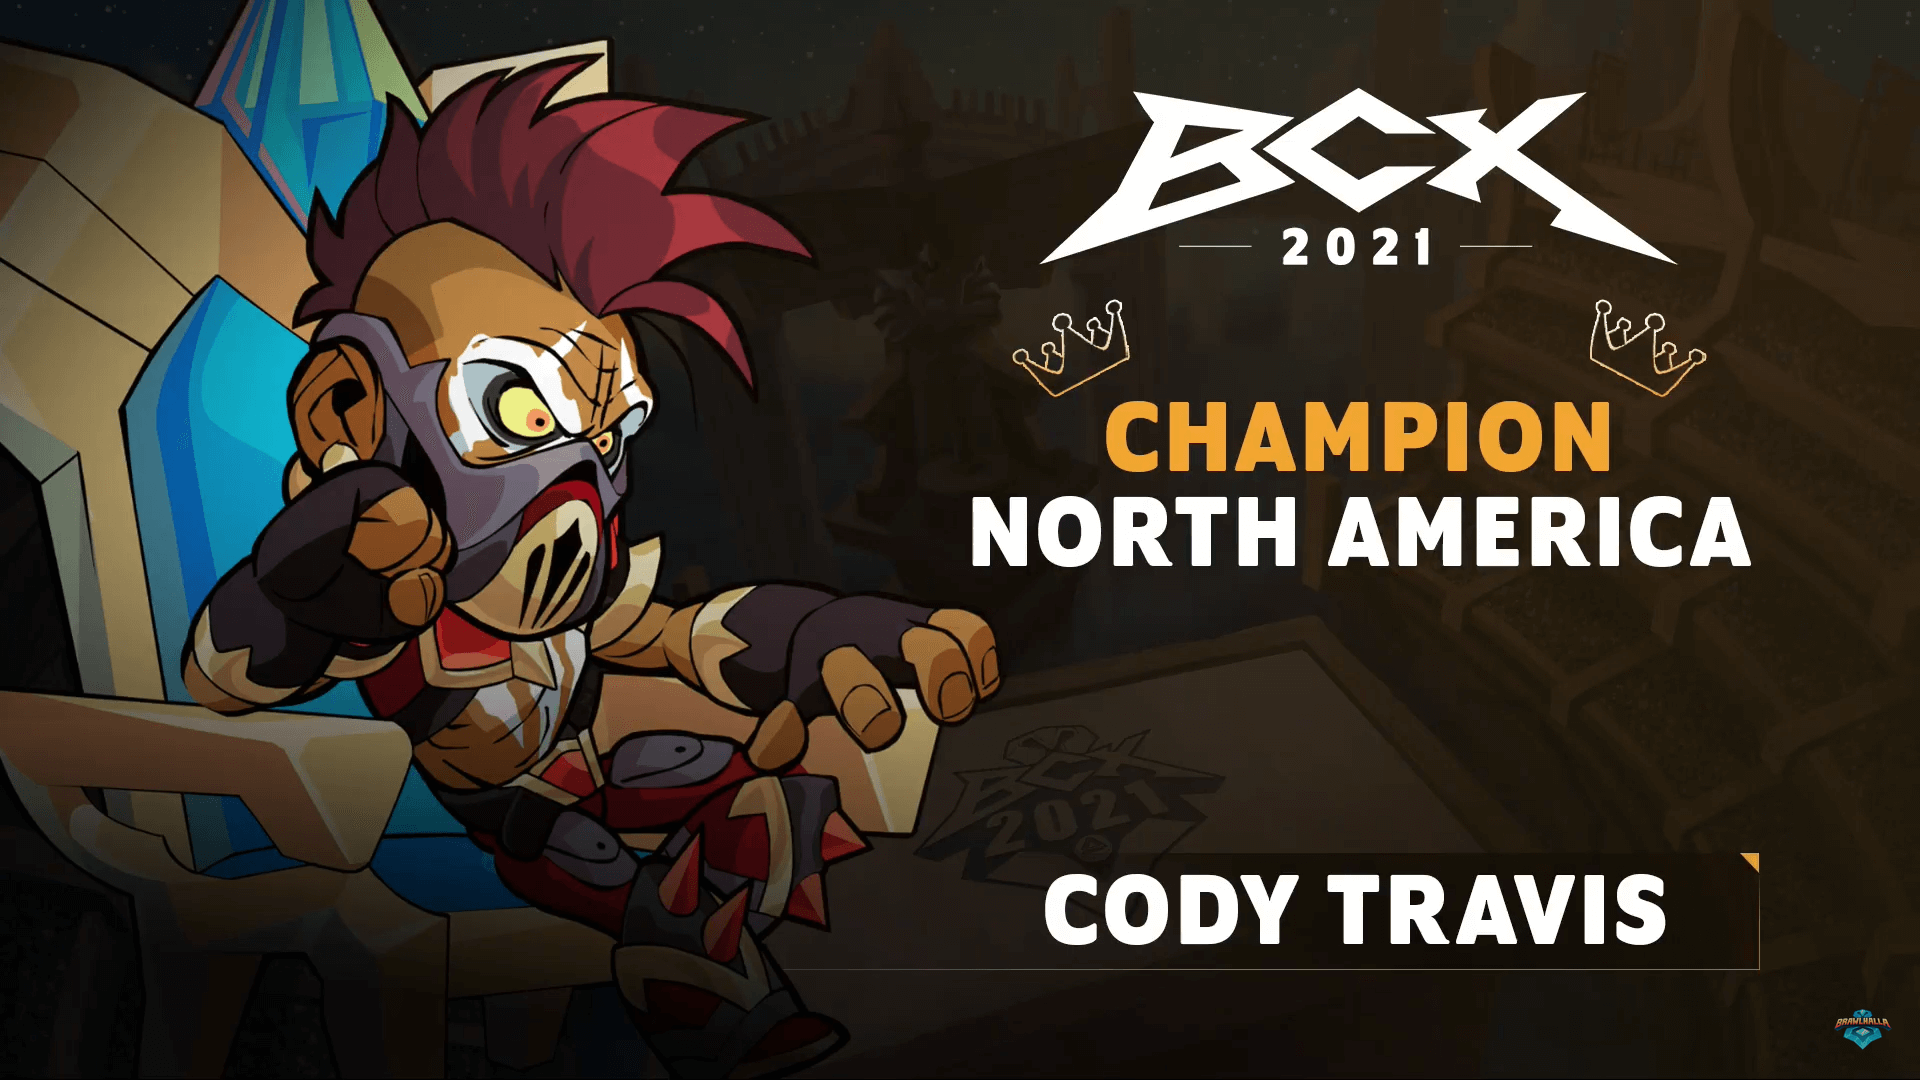 Cody Travis is the Brawlhalla 2021 Champion in North America